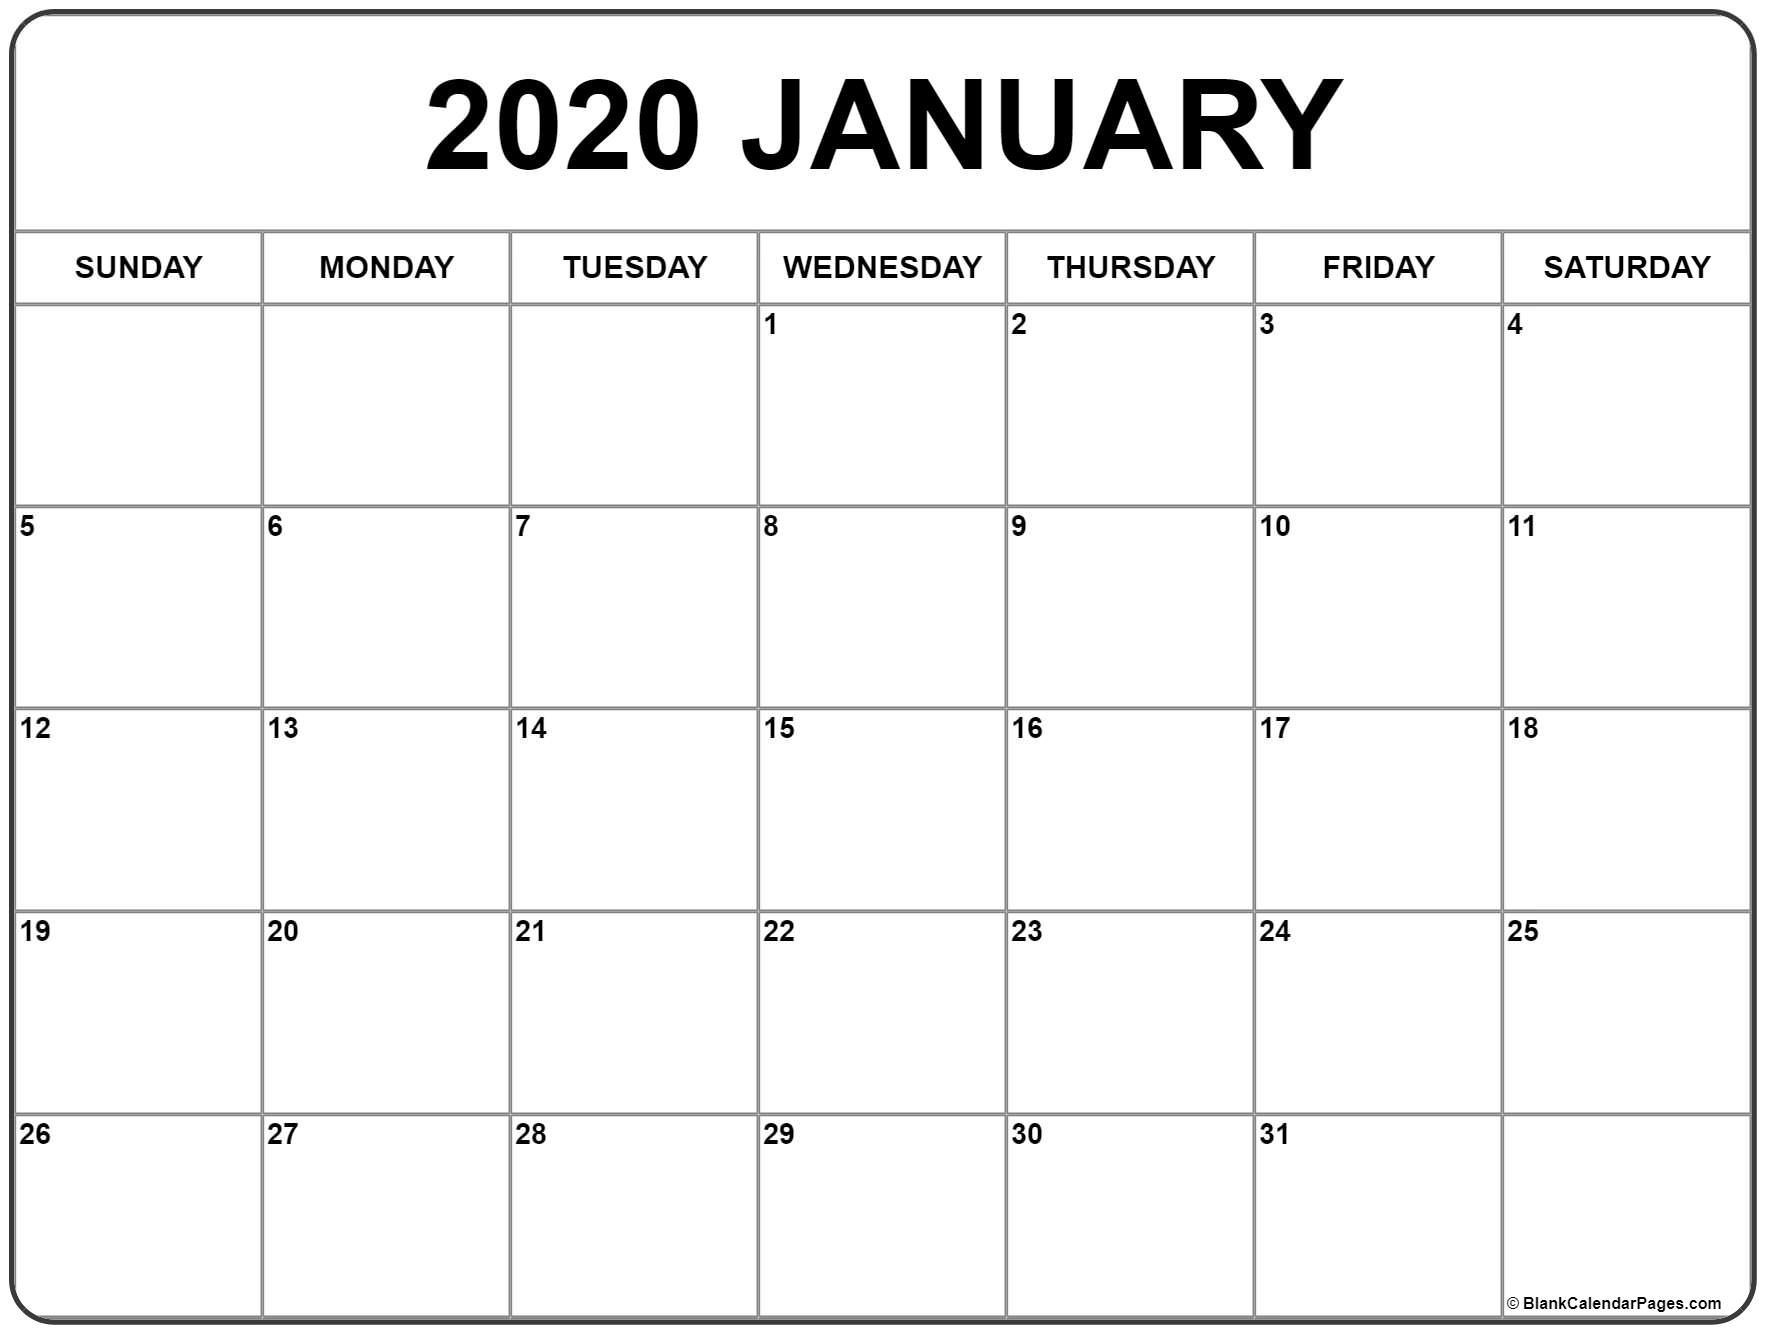 January 2020 Calendar | Free Printable Monthly Calendars-Printable Monthly Bill Pay Calendar 2020